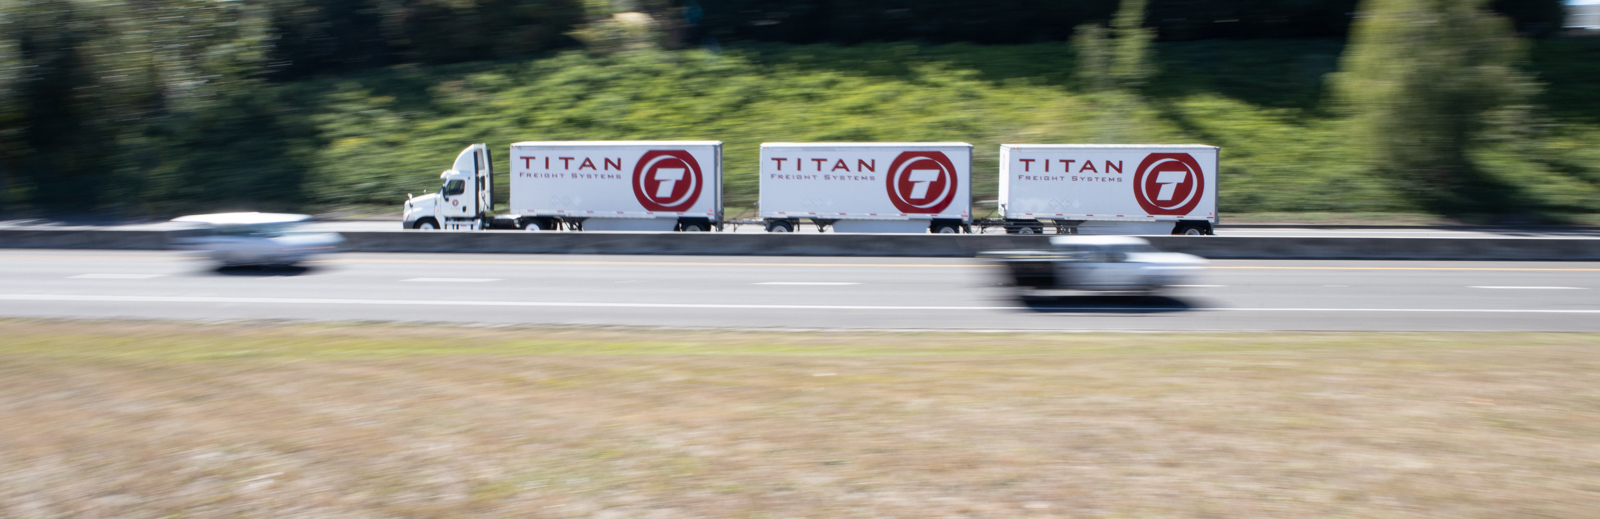 Titan Freight Systems, Inc.